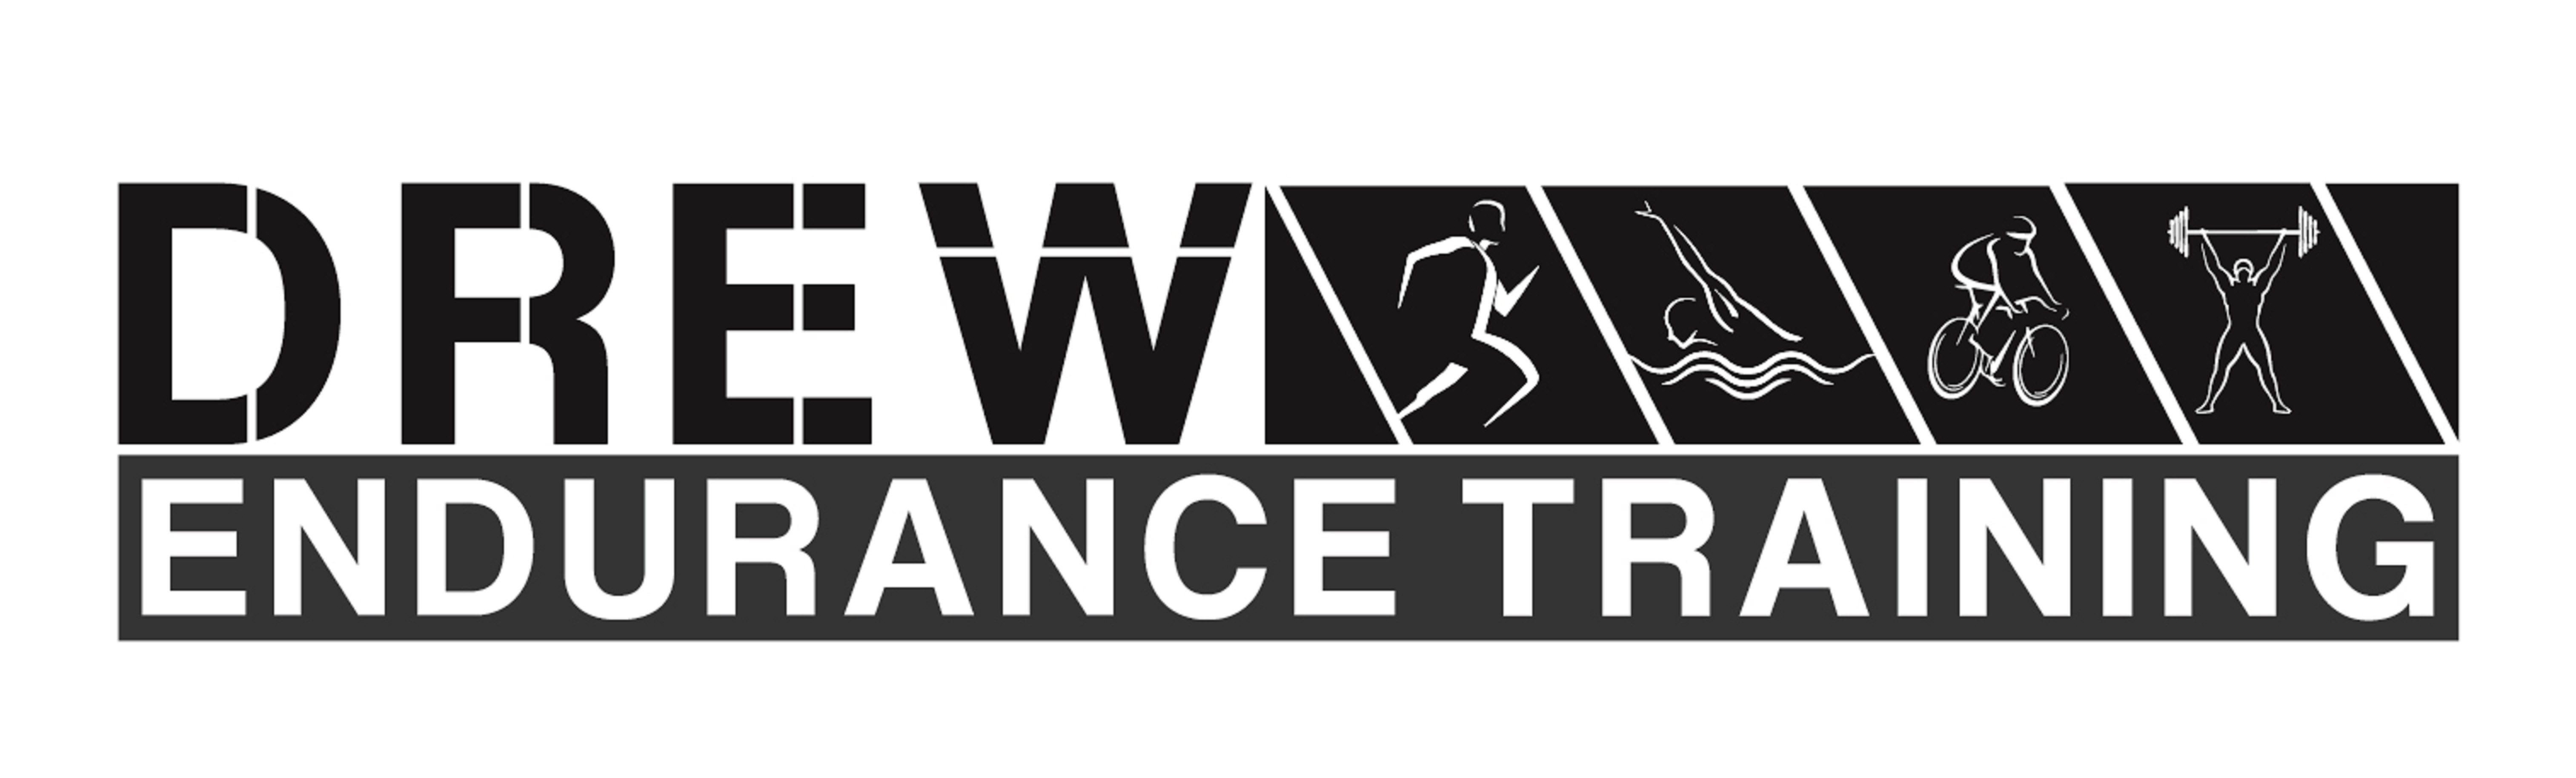 Endurance Logo - Drew endurance logo | Southampton University Triathlon Club